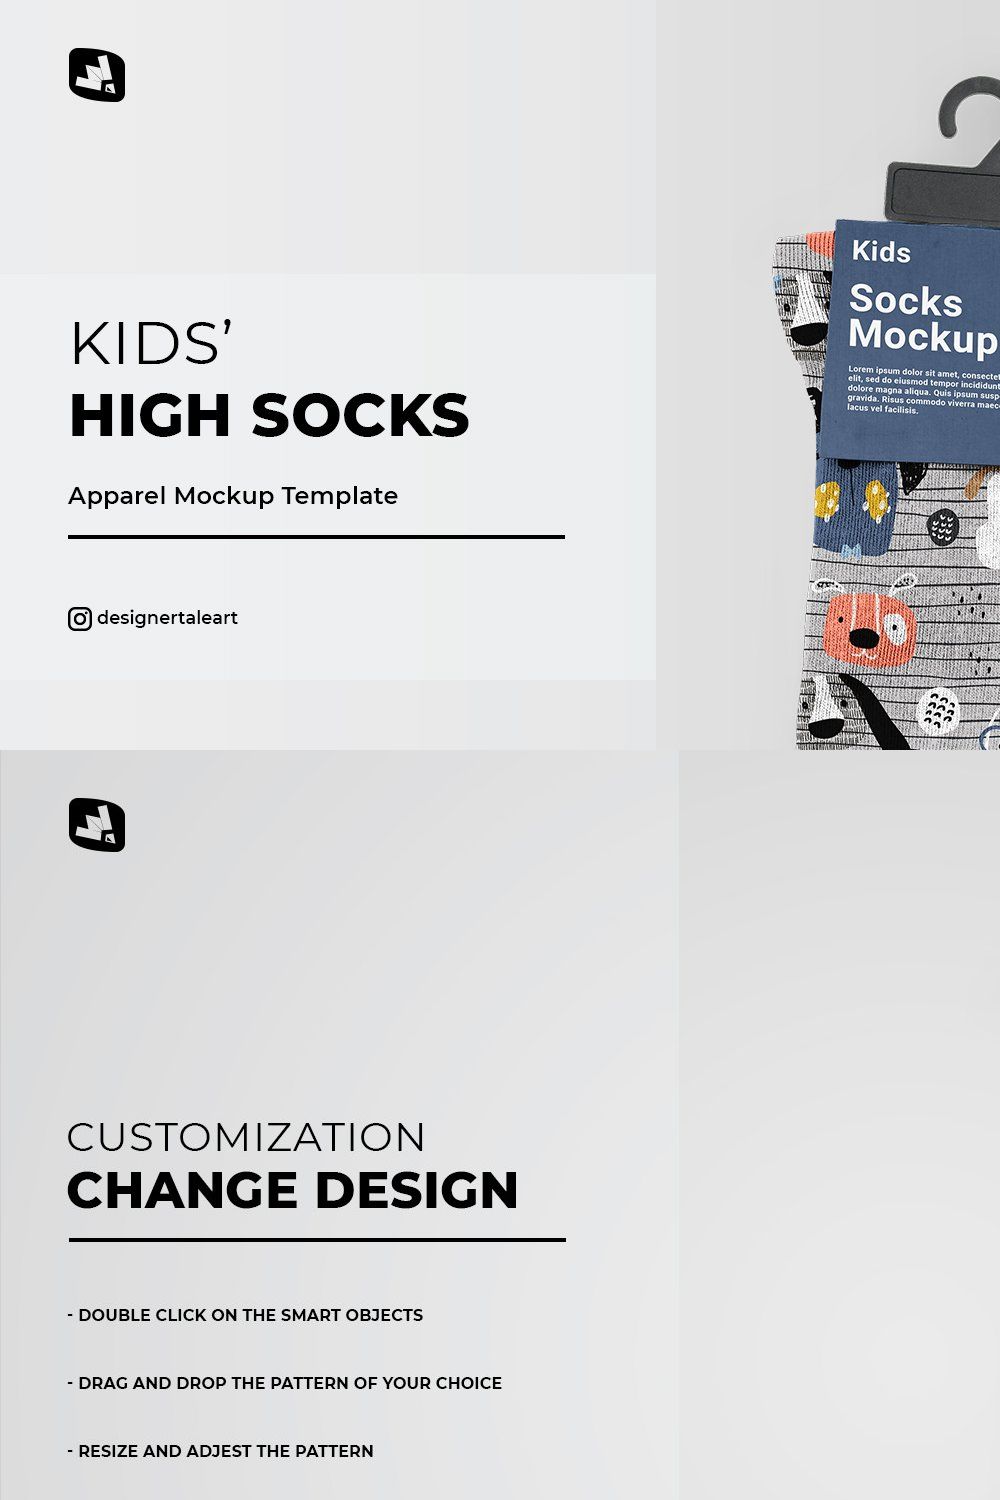 Kids High Socks Mockup pinterest preview image.